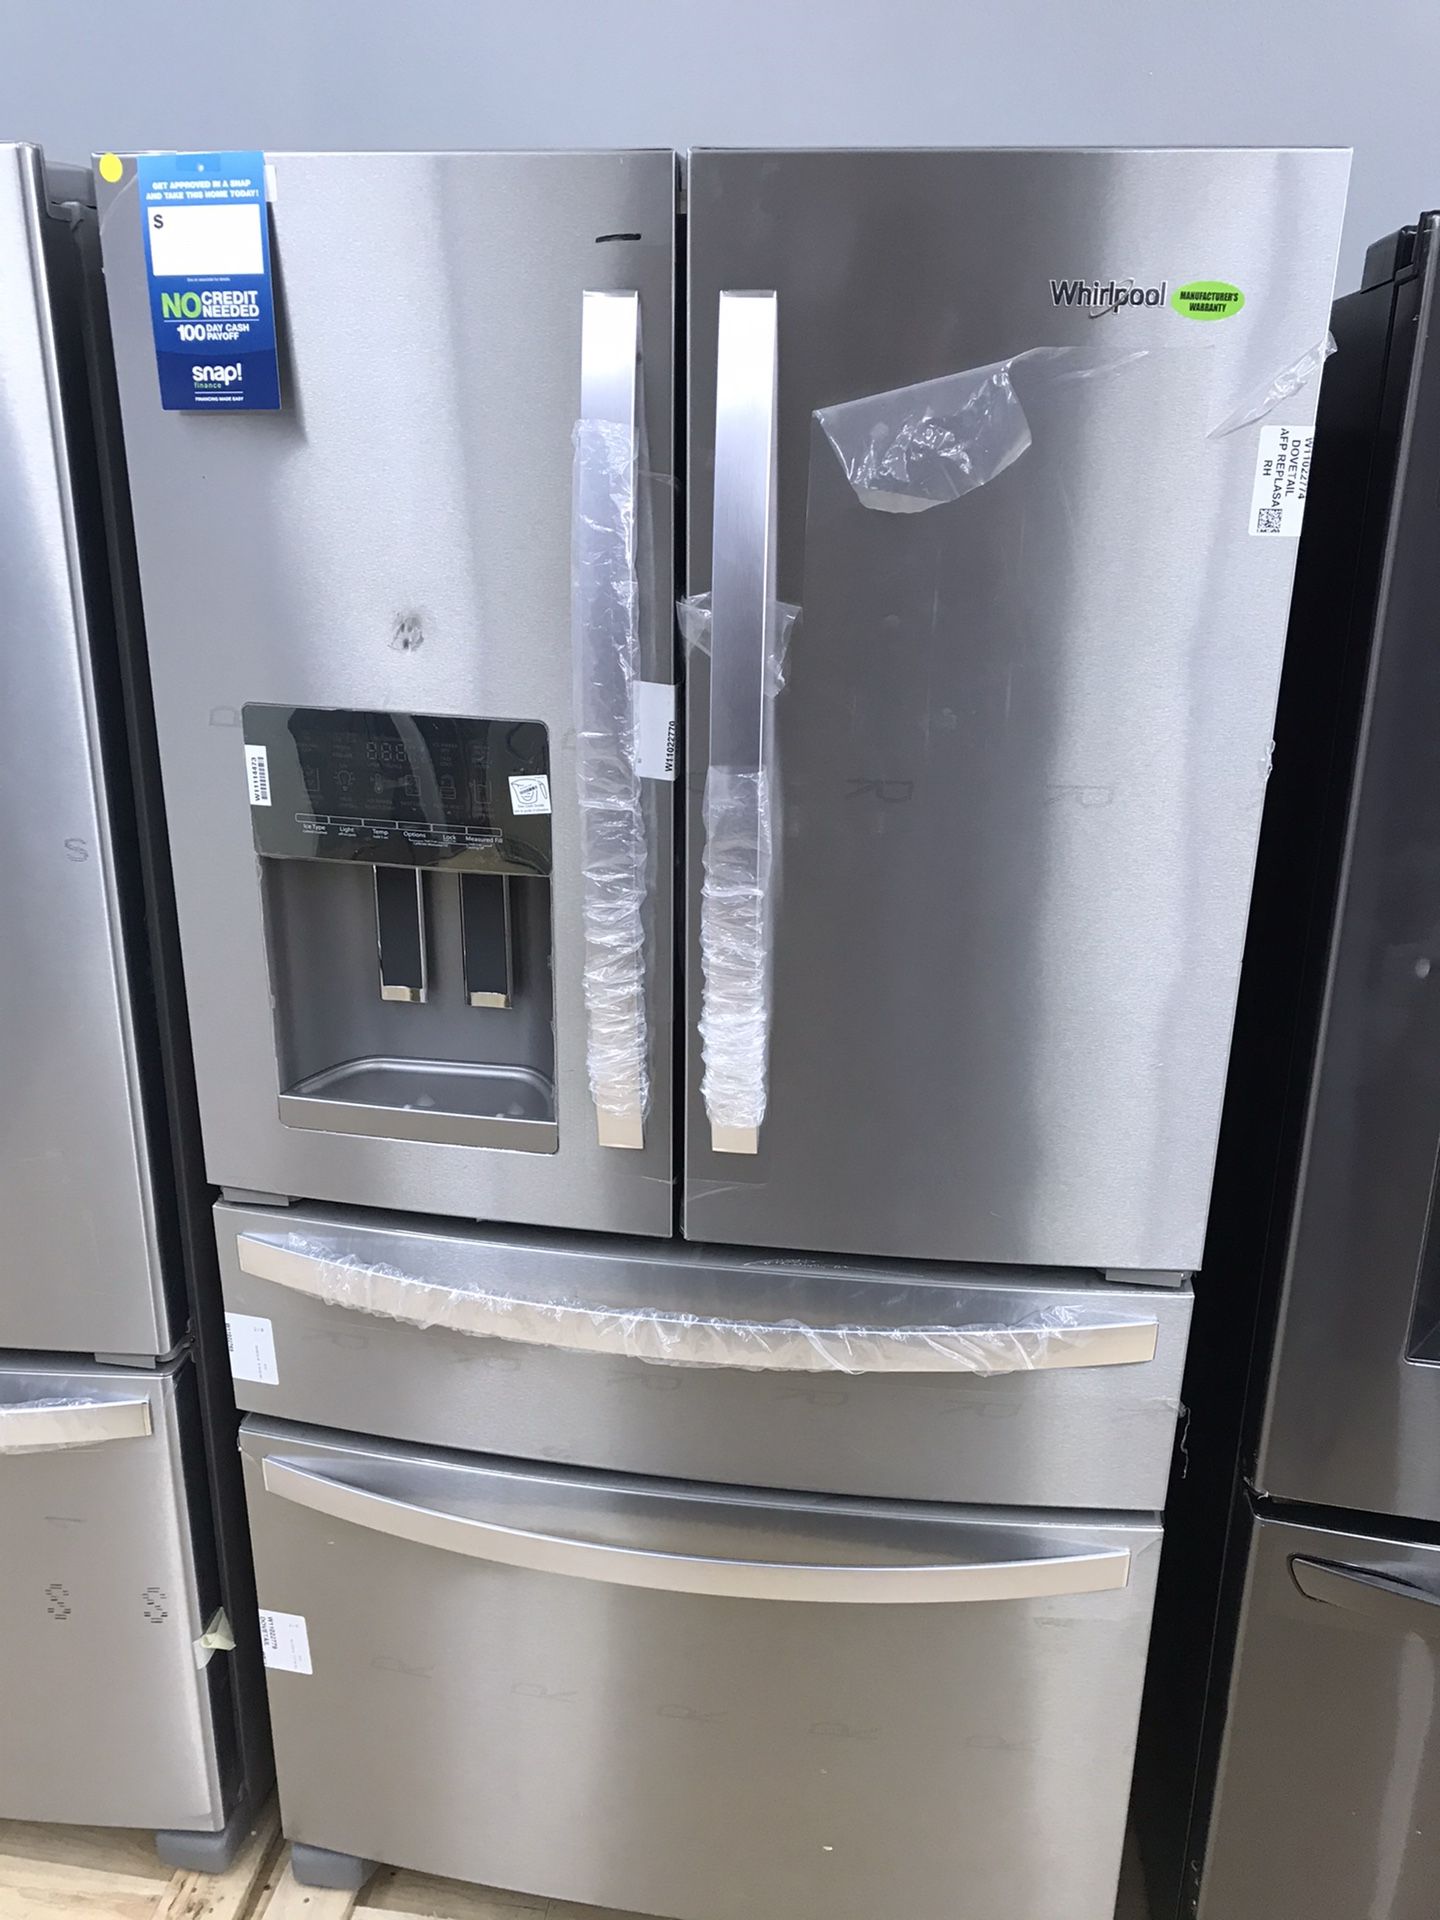 Brand new Whirlpool stainless steel refrigerator